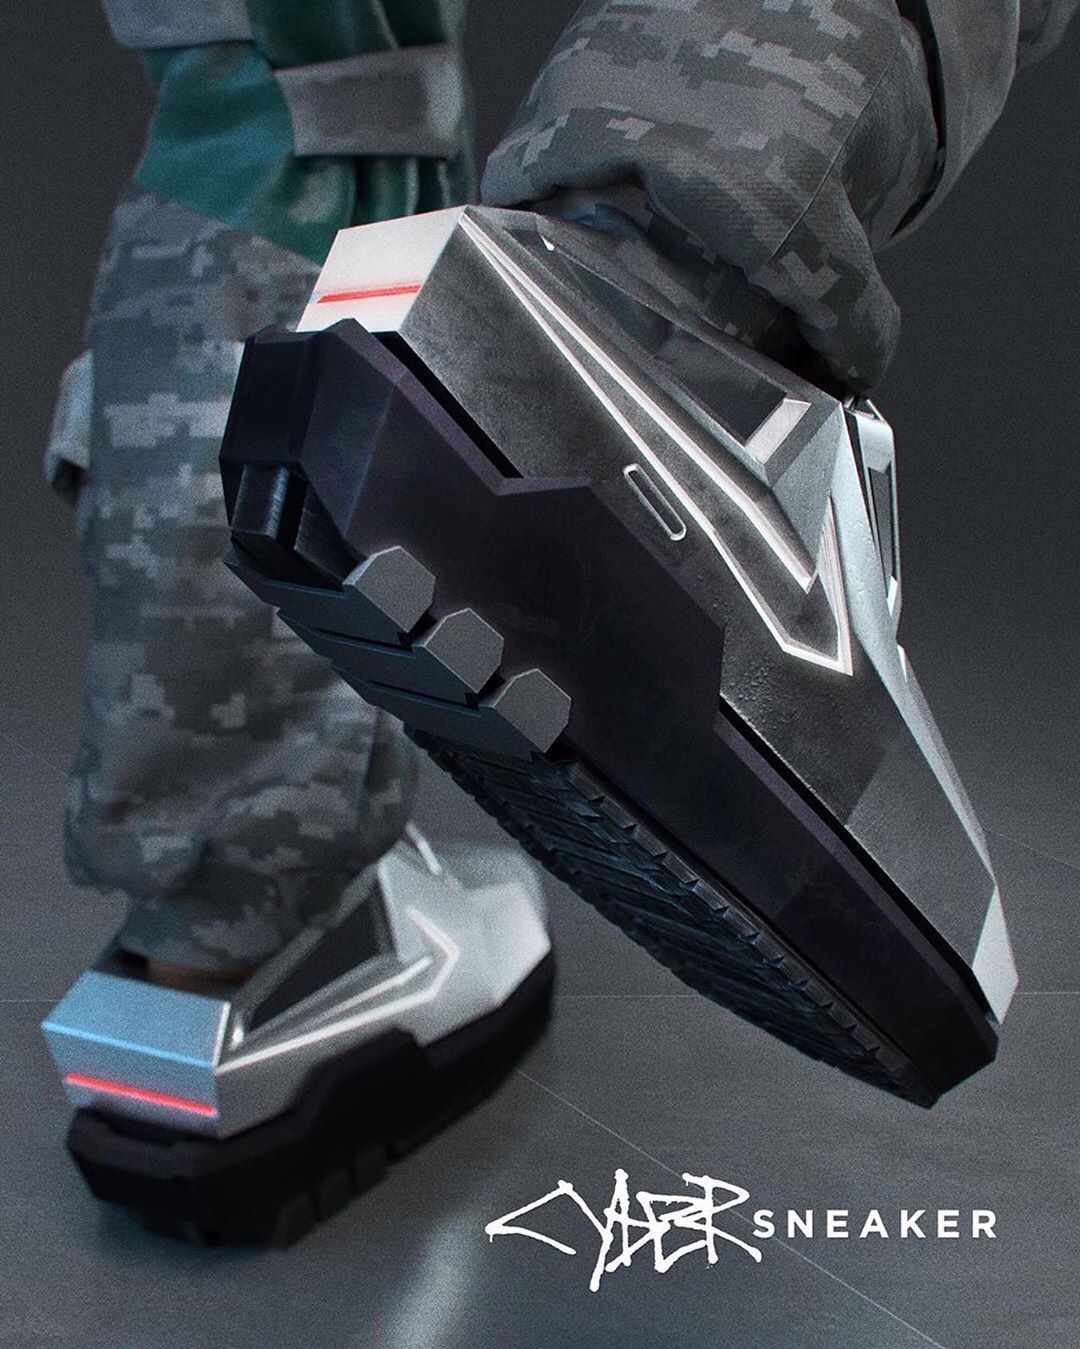 Tesla Sneakers Look Almost Real, Shiny Nike Logo - autoevolution